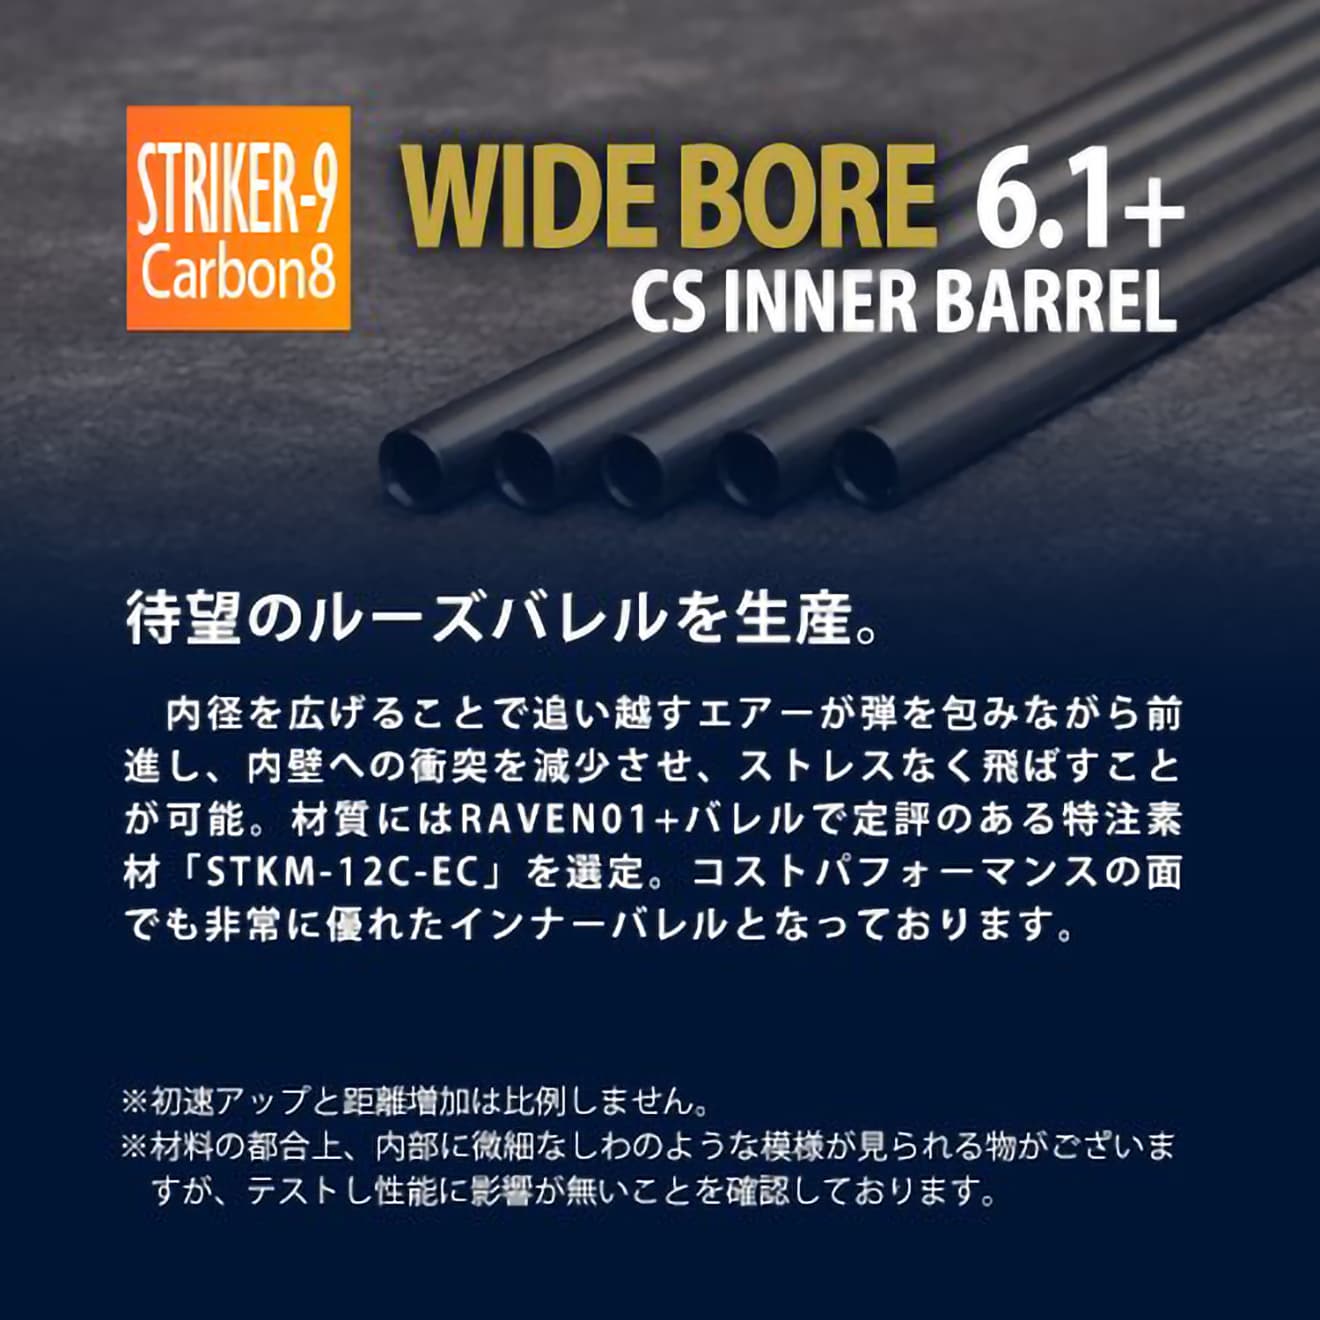 PDI WIDEBOREシリーズ 6.1+  Carbon8 STRIKER-9専用 GBB ルーズ インナーバレル(6.1±0.007mm) 97mm